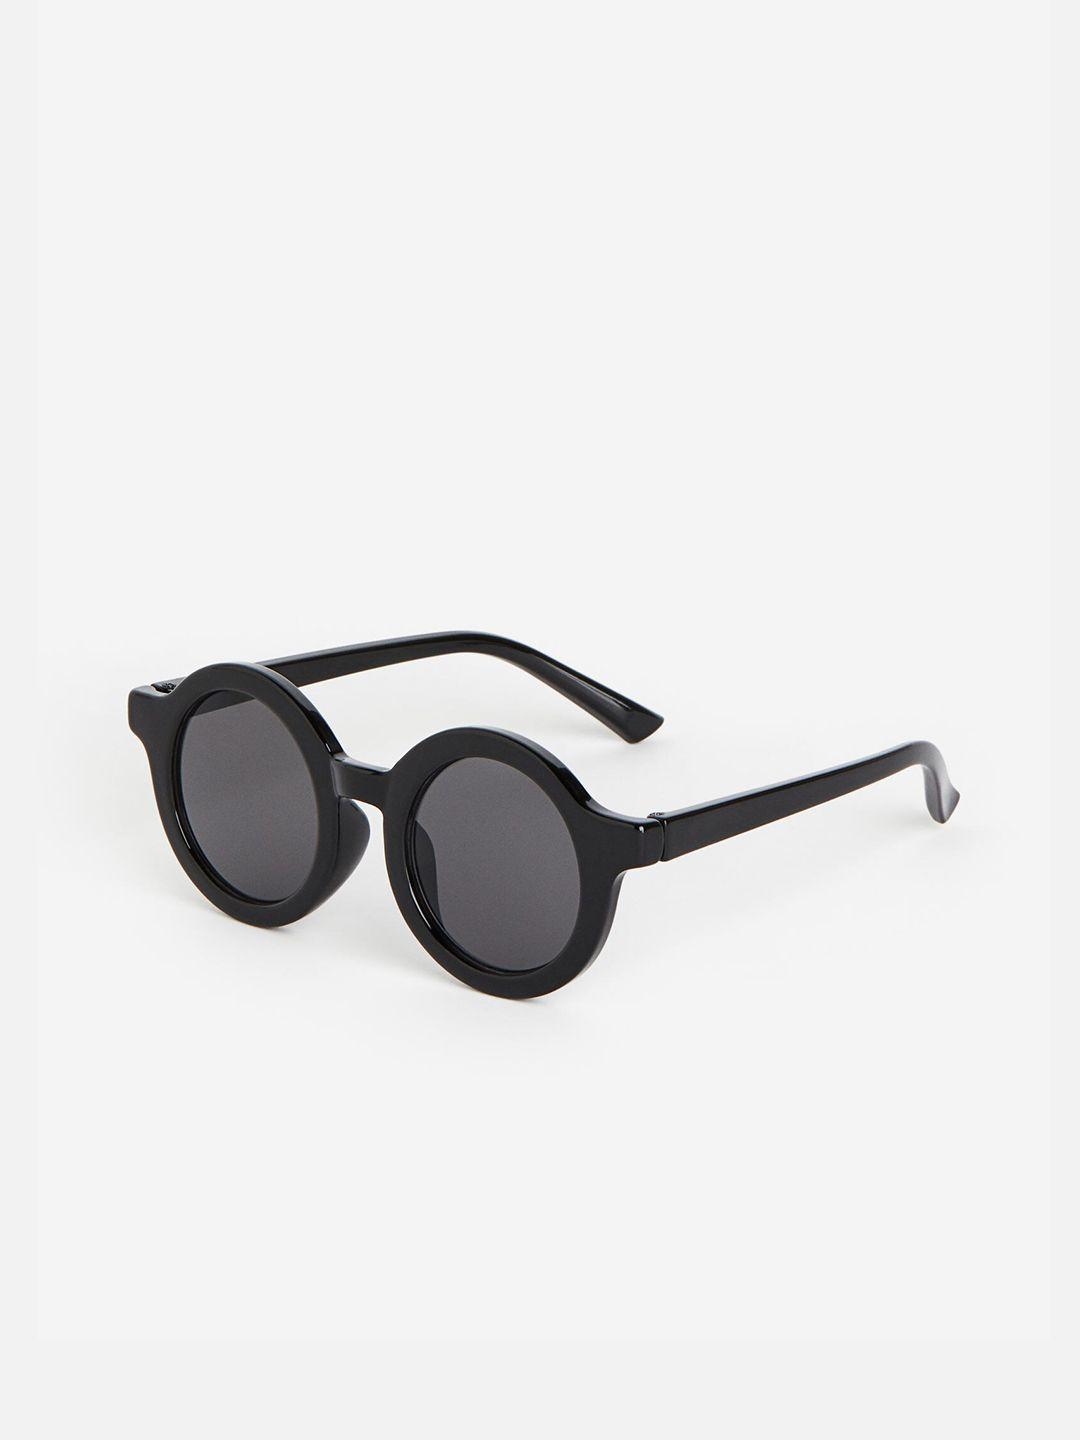 H&M Boys UV-Protected Round Sunglasses